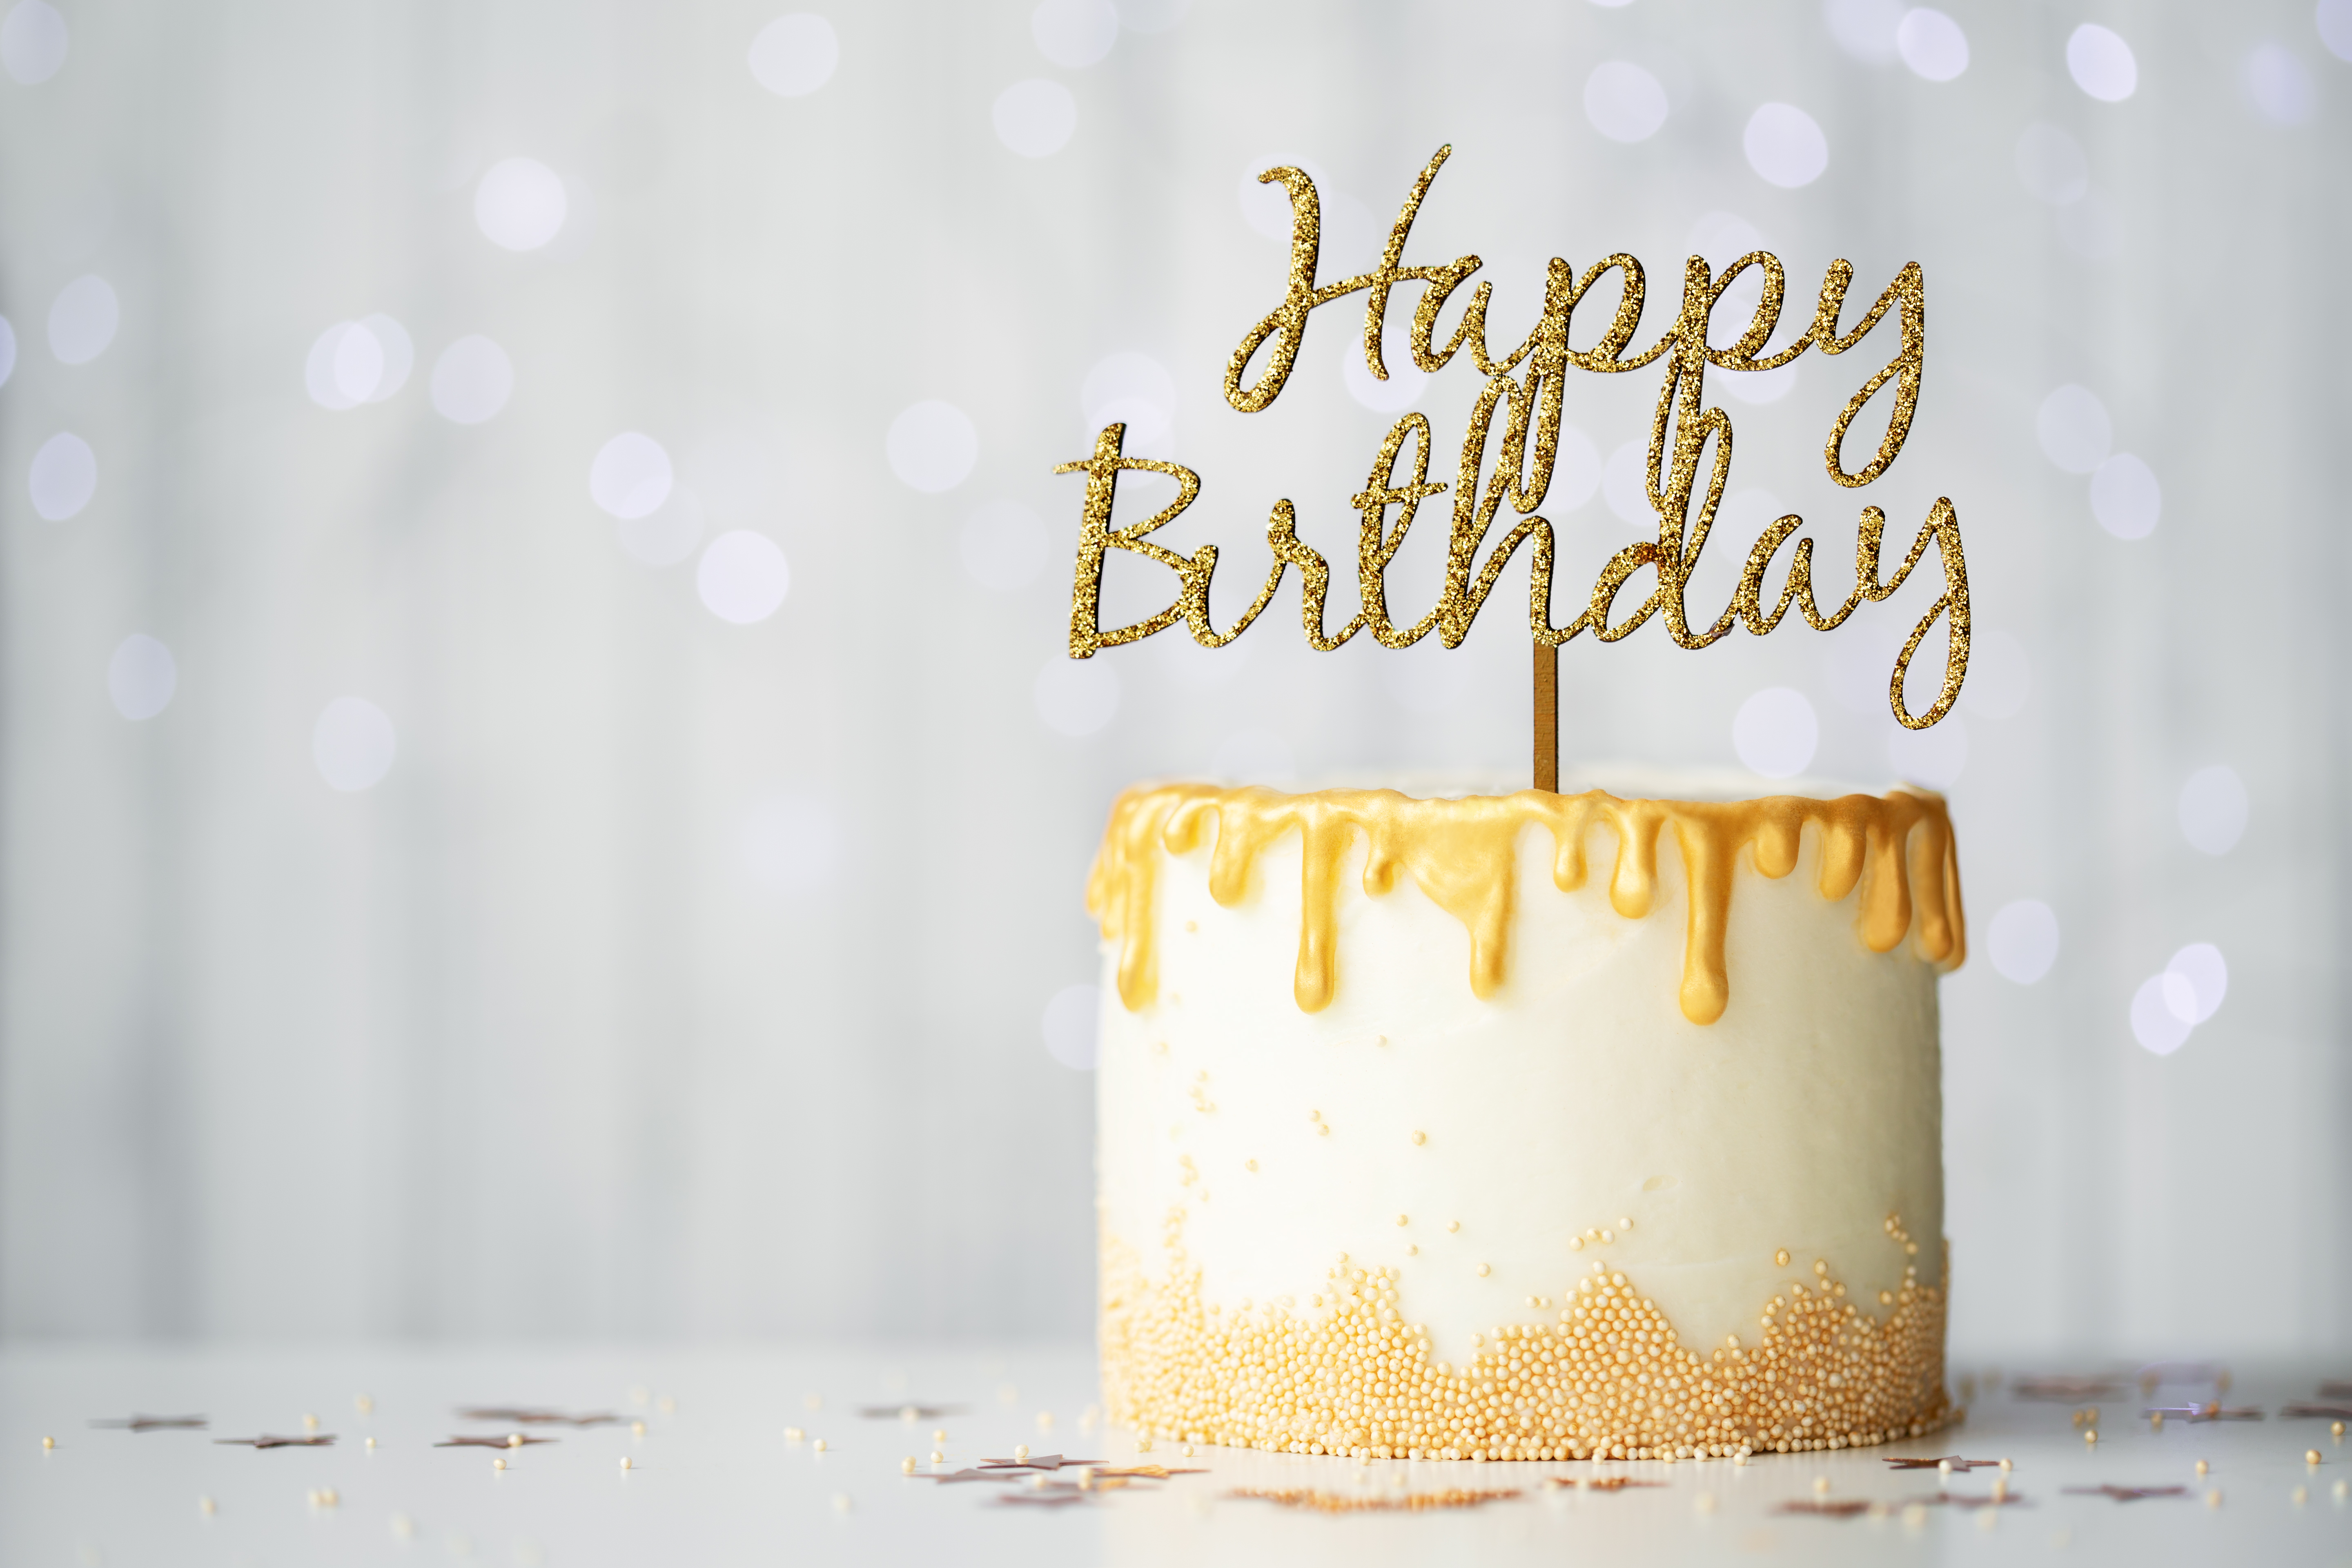 A happy birthday cake | Source: Shutterstock